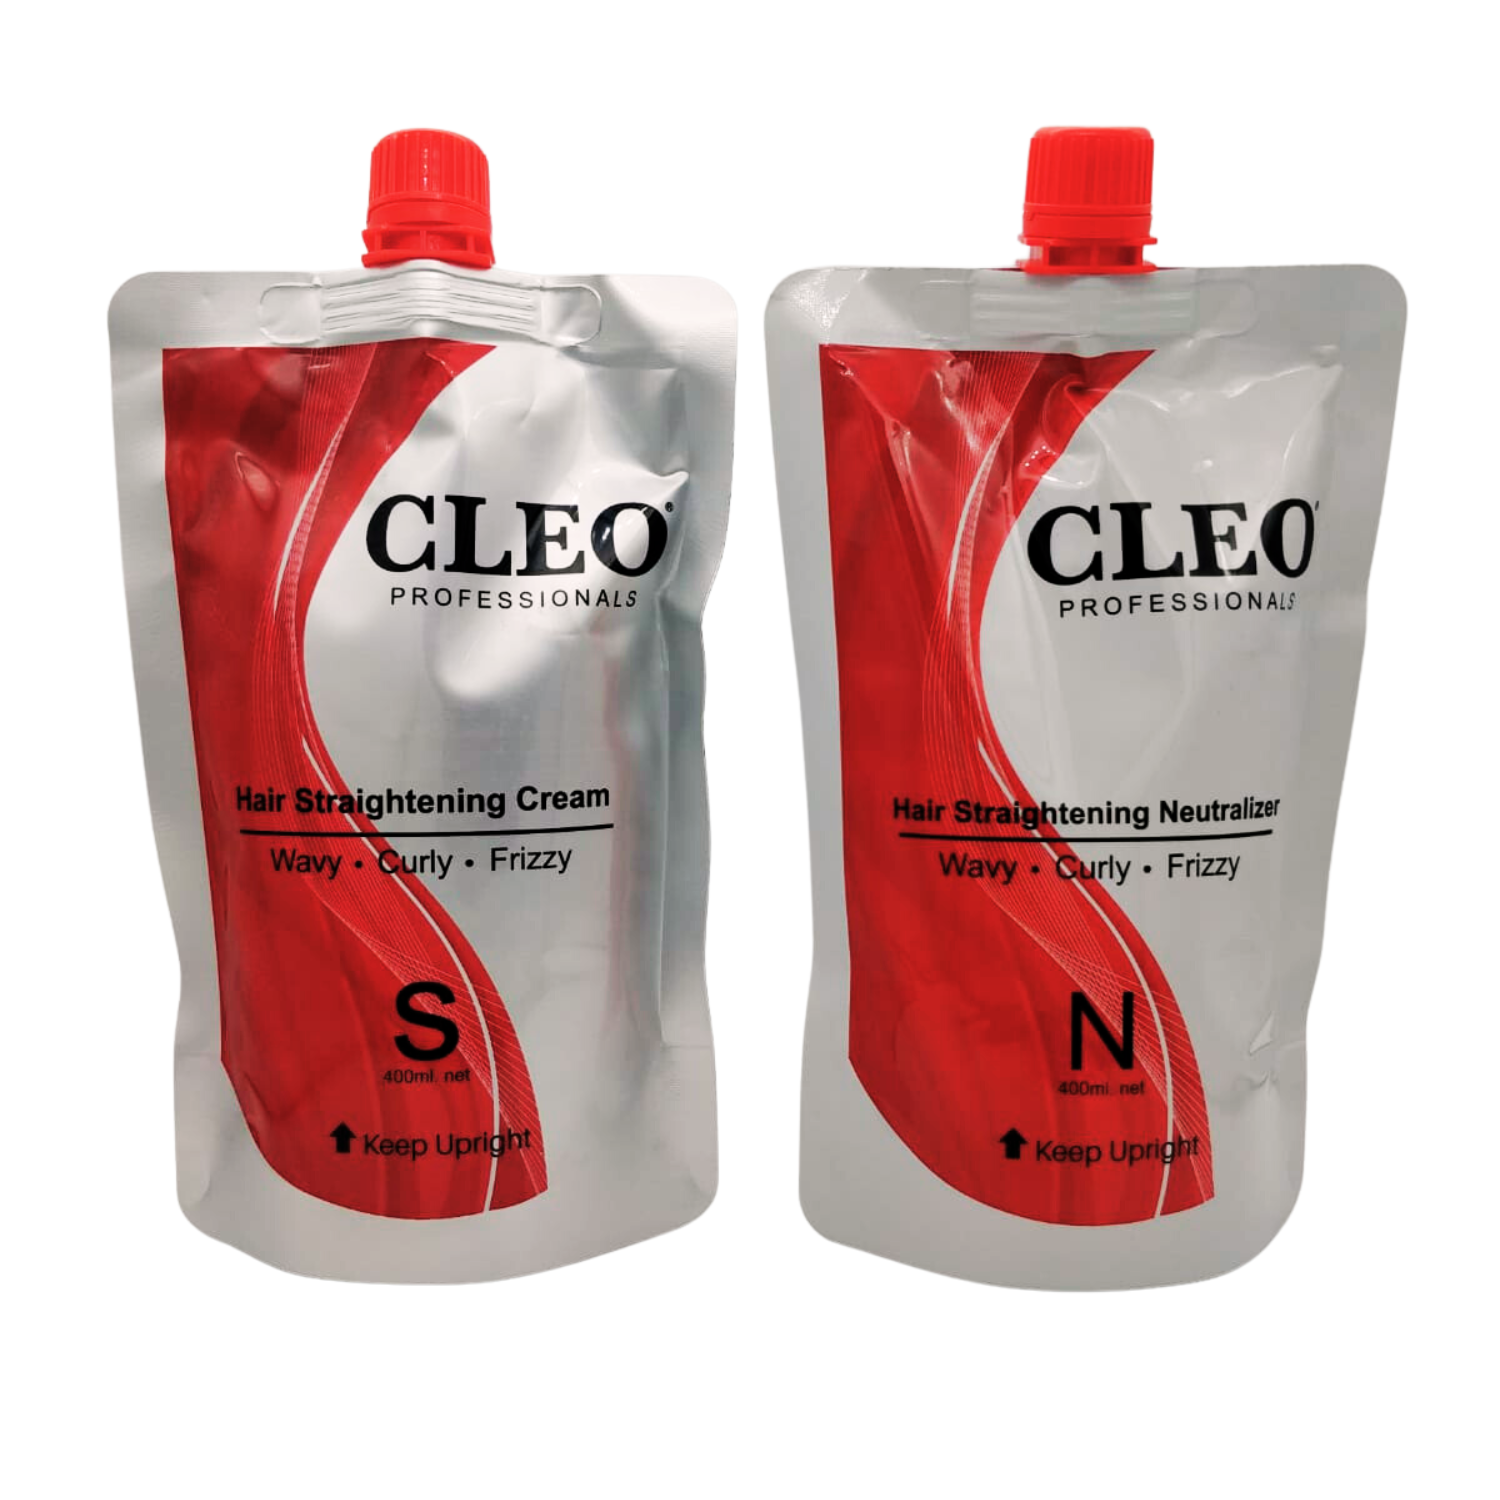 Cleo Pro Straightening Cream + Neutralizer Cream For Wavy Curly Frizzy (1000ml) Cleo Pro.